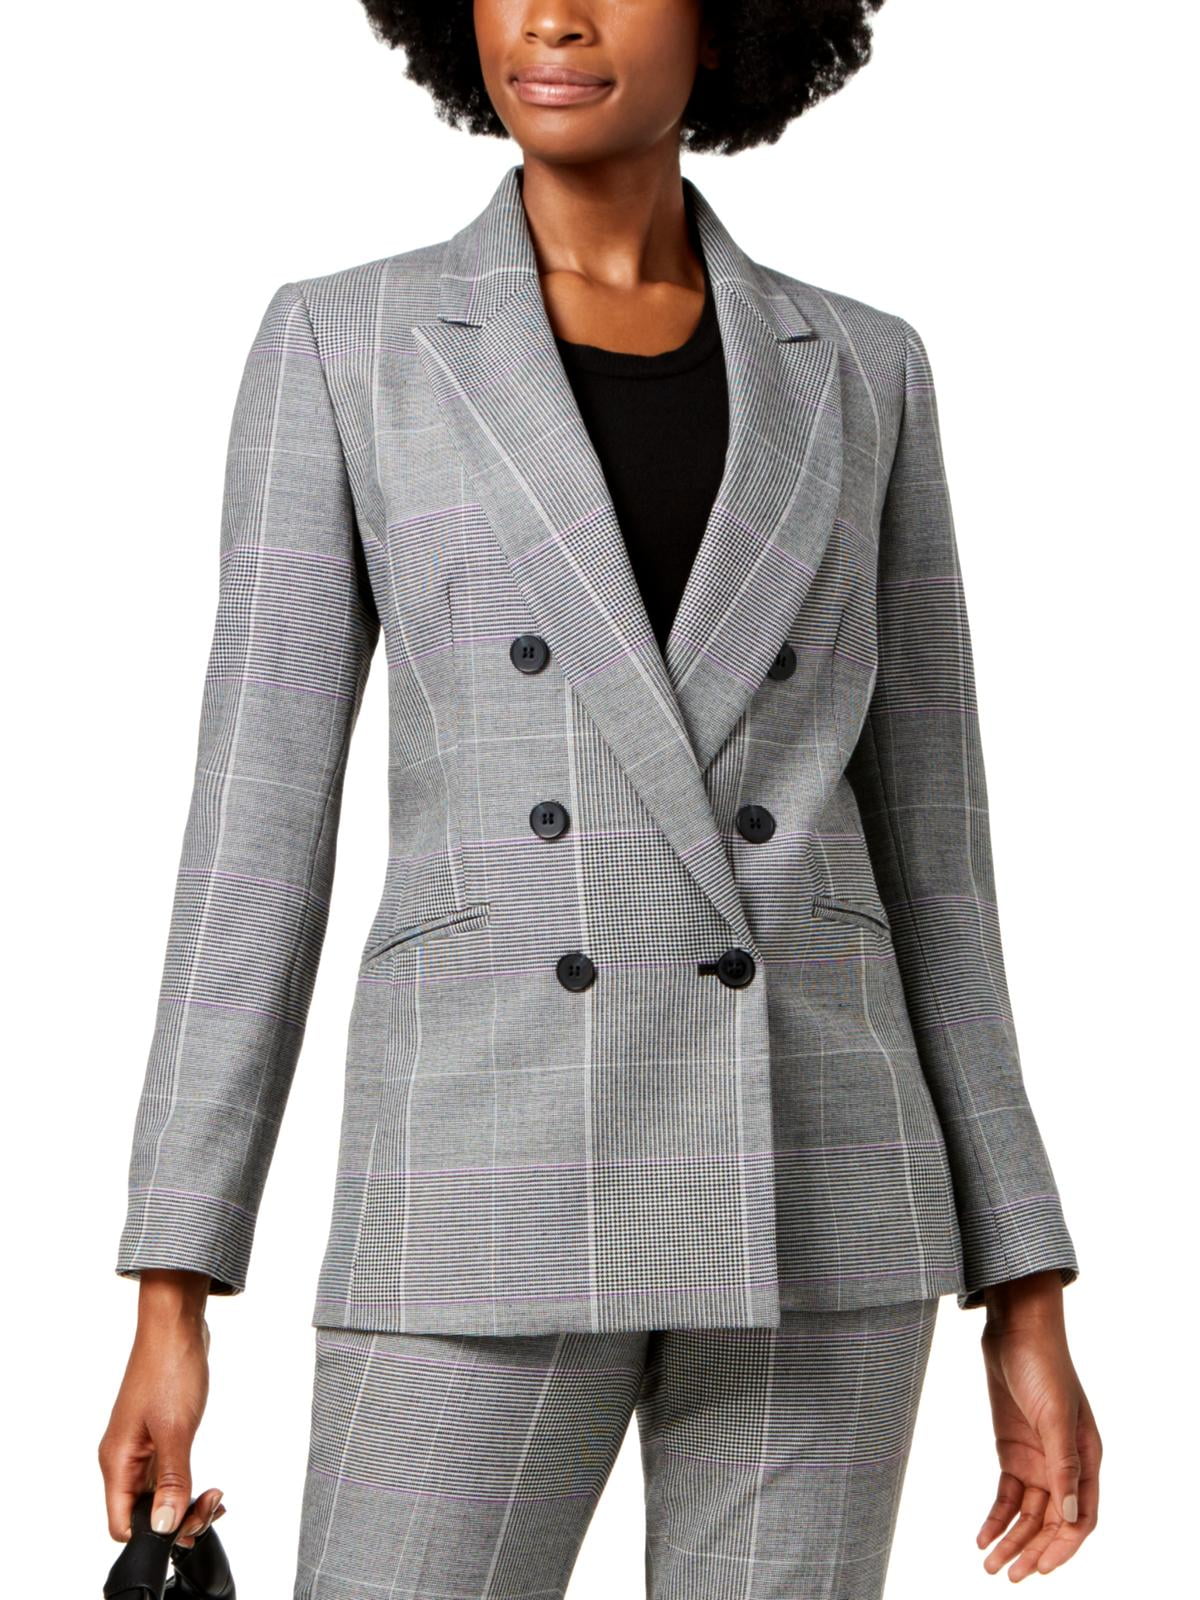 Womens Wool Blend Blazer Jacket Ladies Coat Size 8 10 12 14 16 Black New